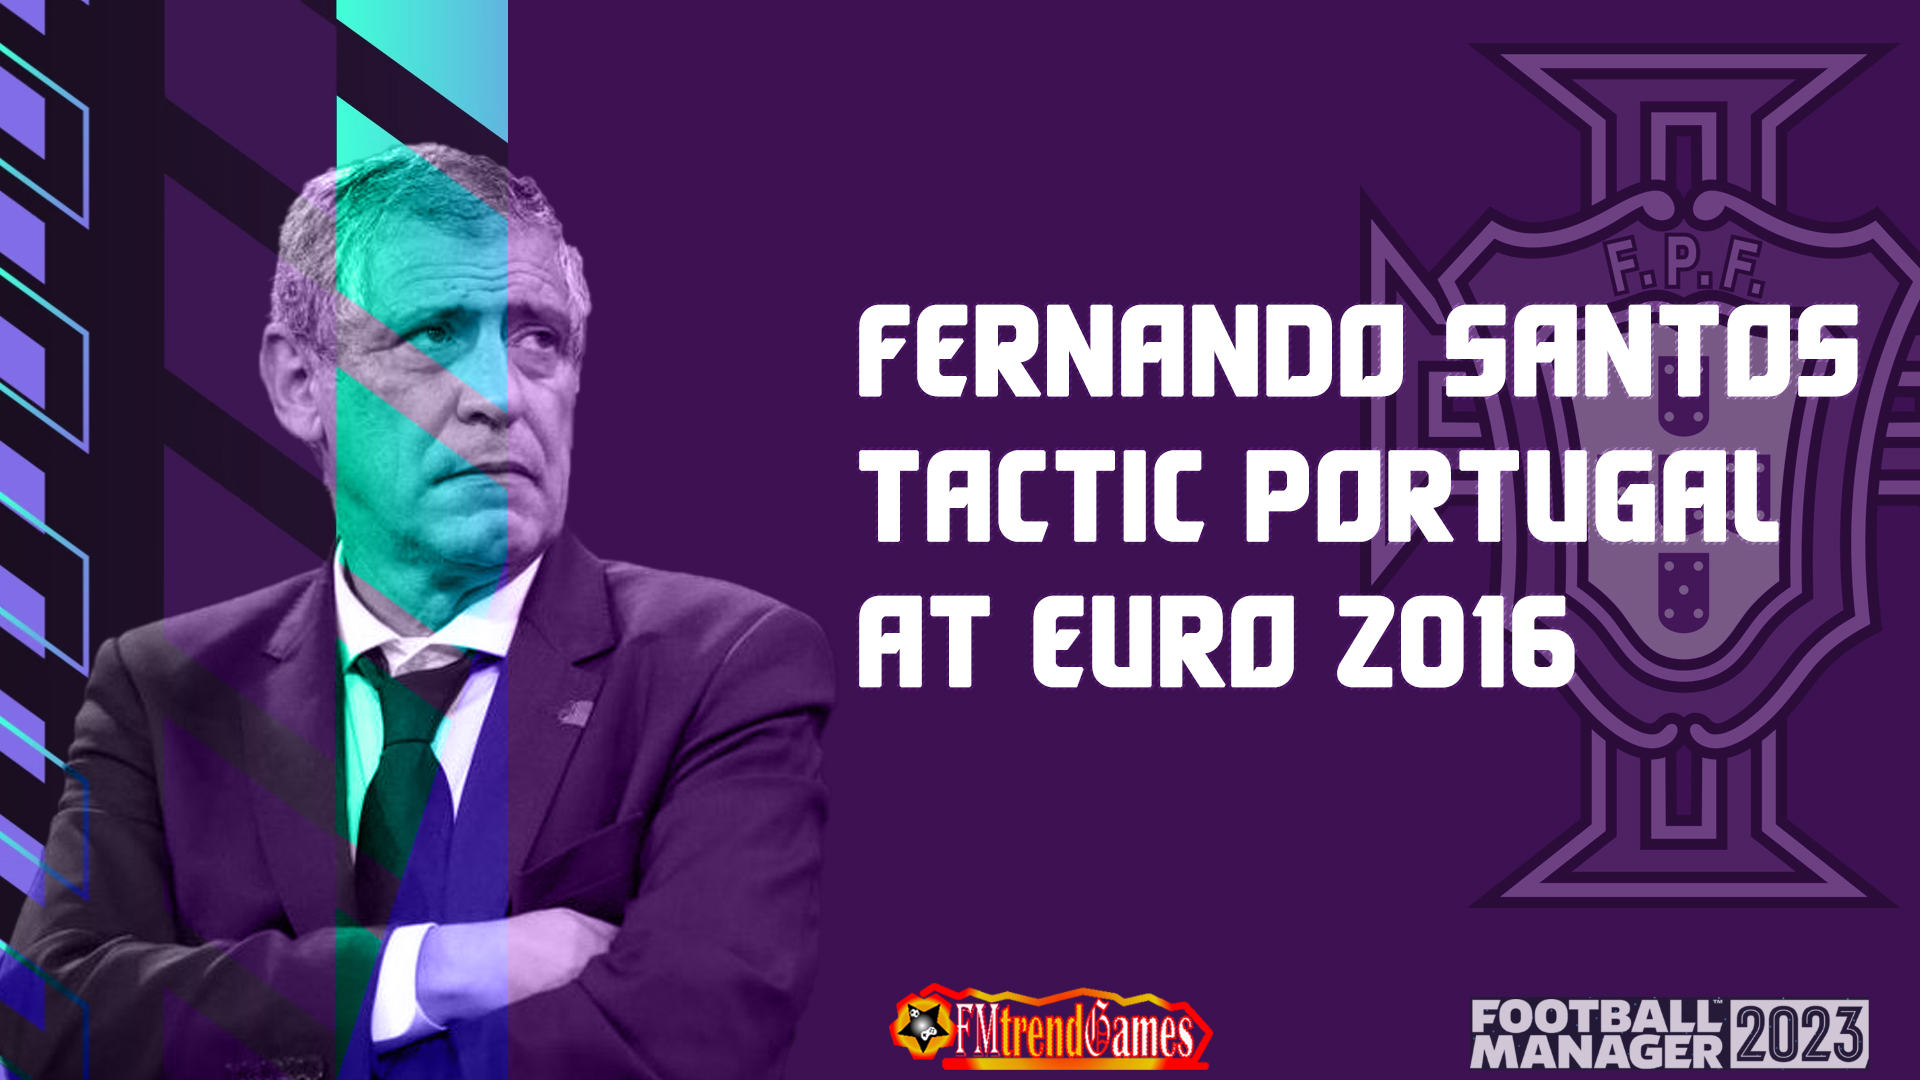 Fernando Santos 4-4-2 Diamond Tactic with Portugal at Euro 2016